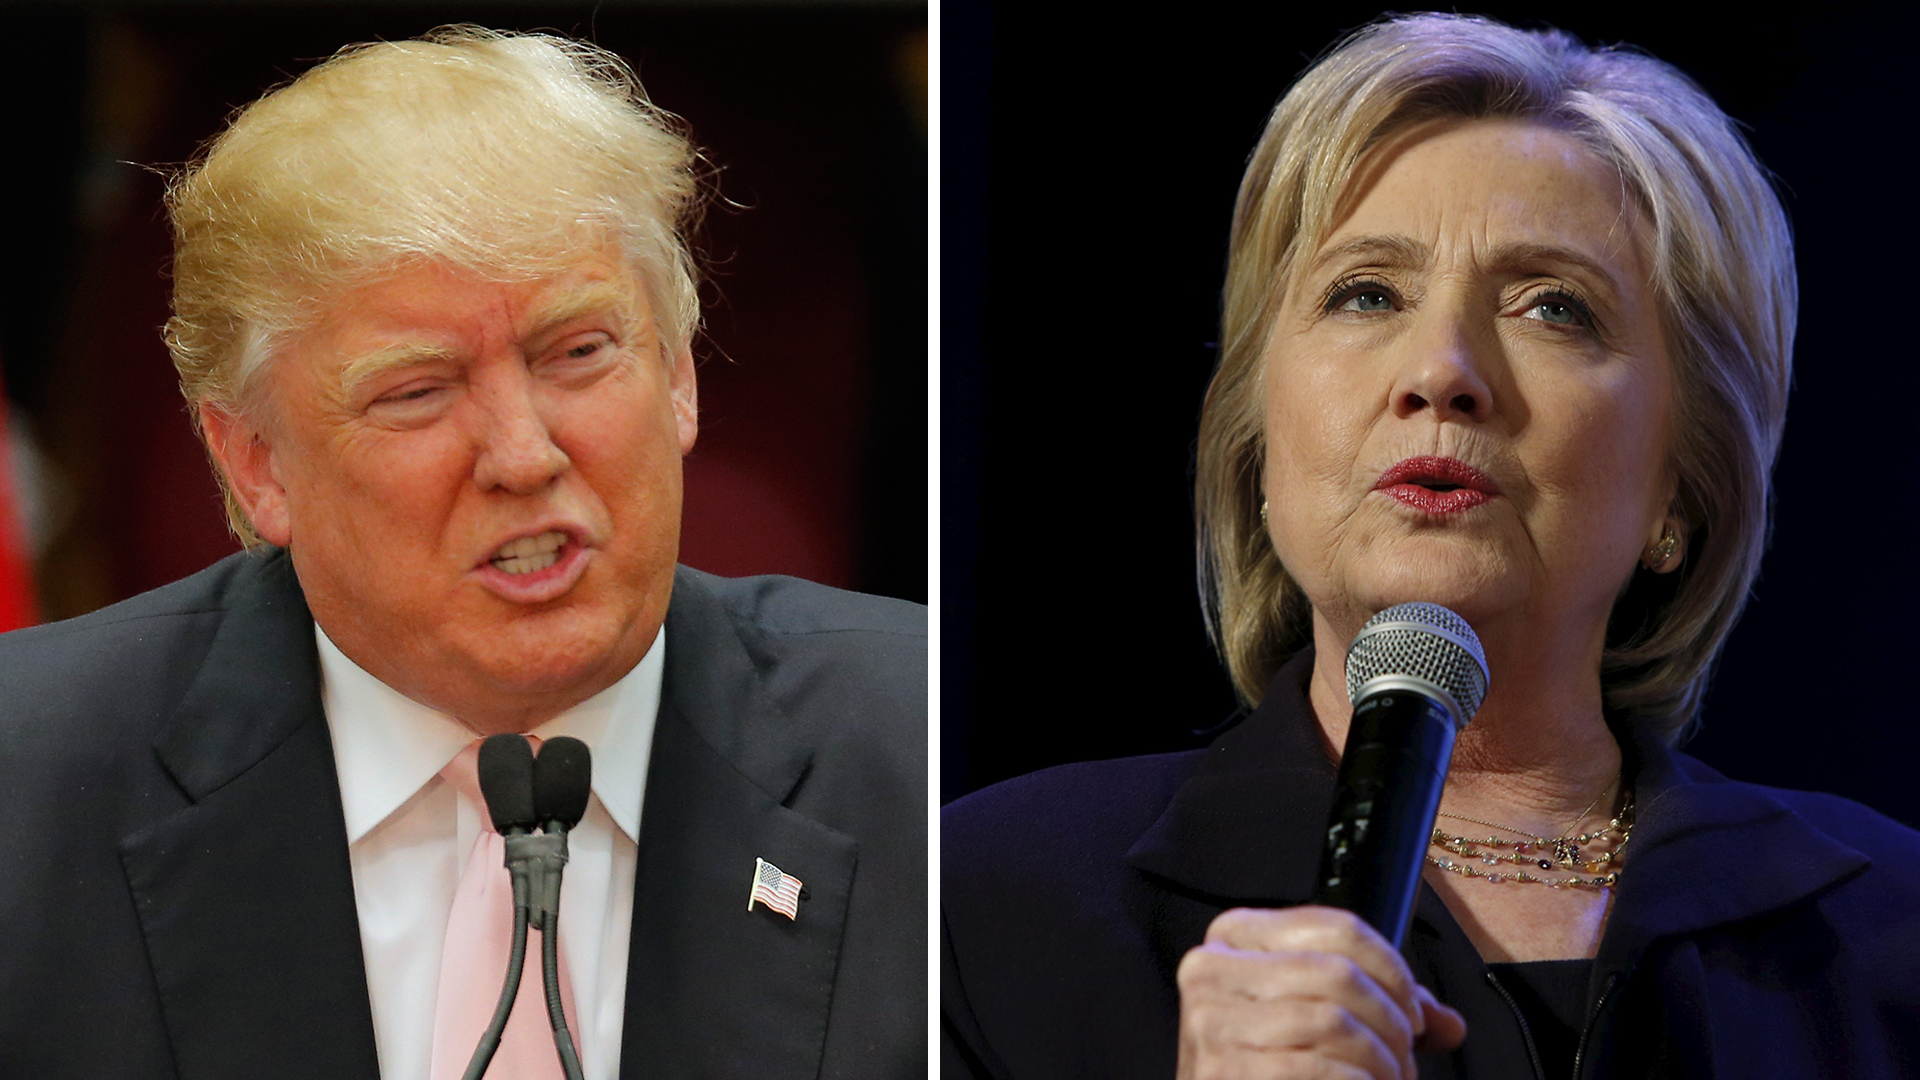 Poll: Donald Trump, Hillary Clinton tied across battleground states - CBS News